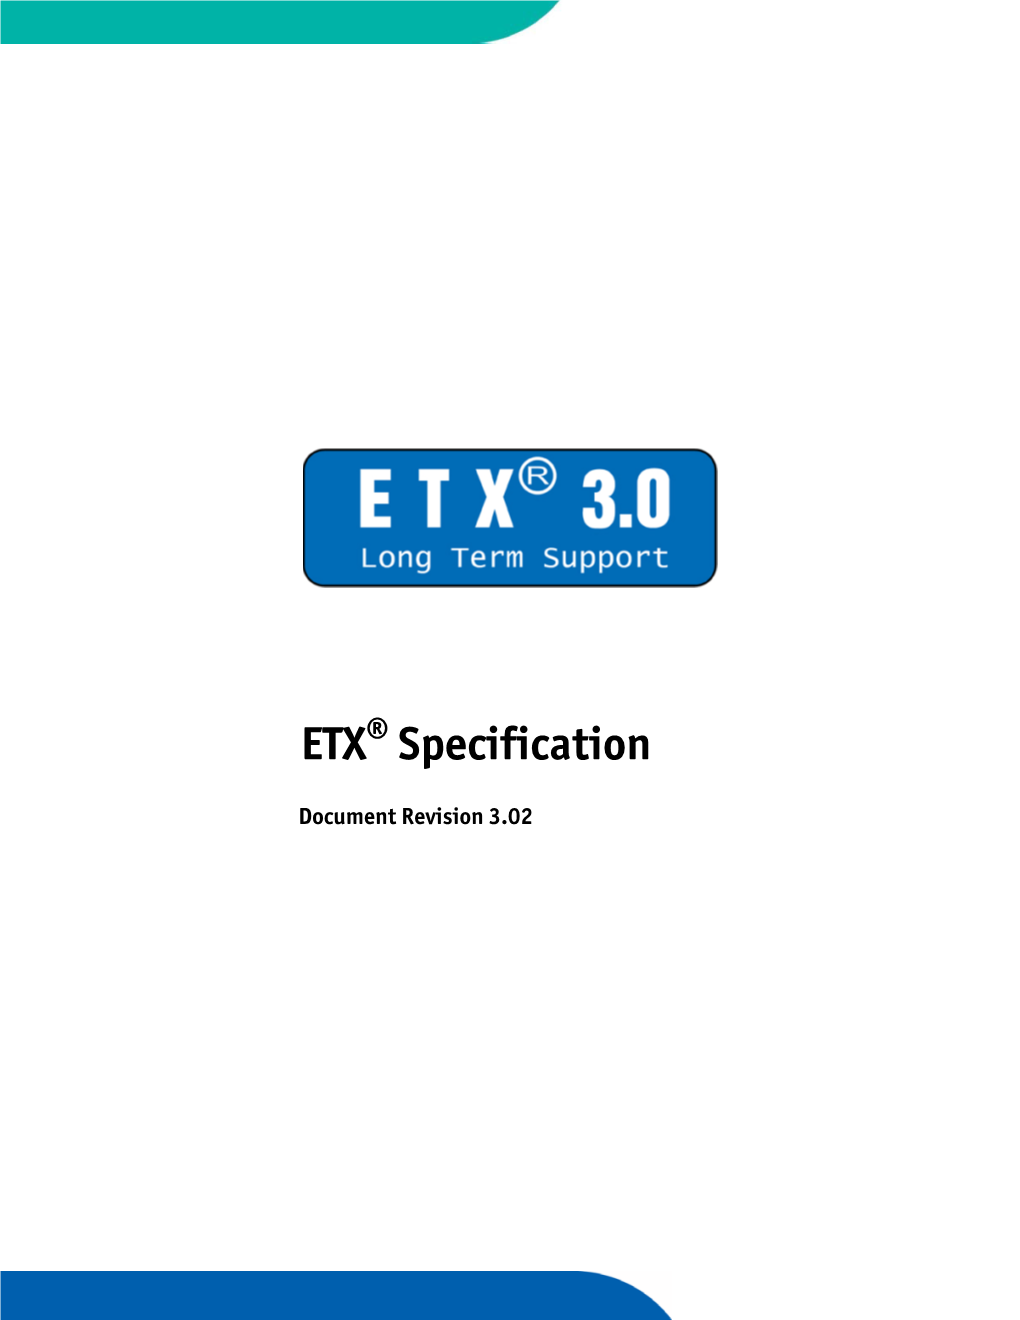 ETX Component SBC™ Specification